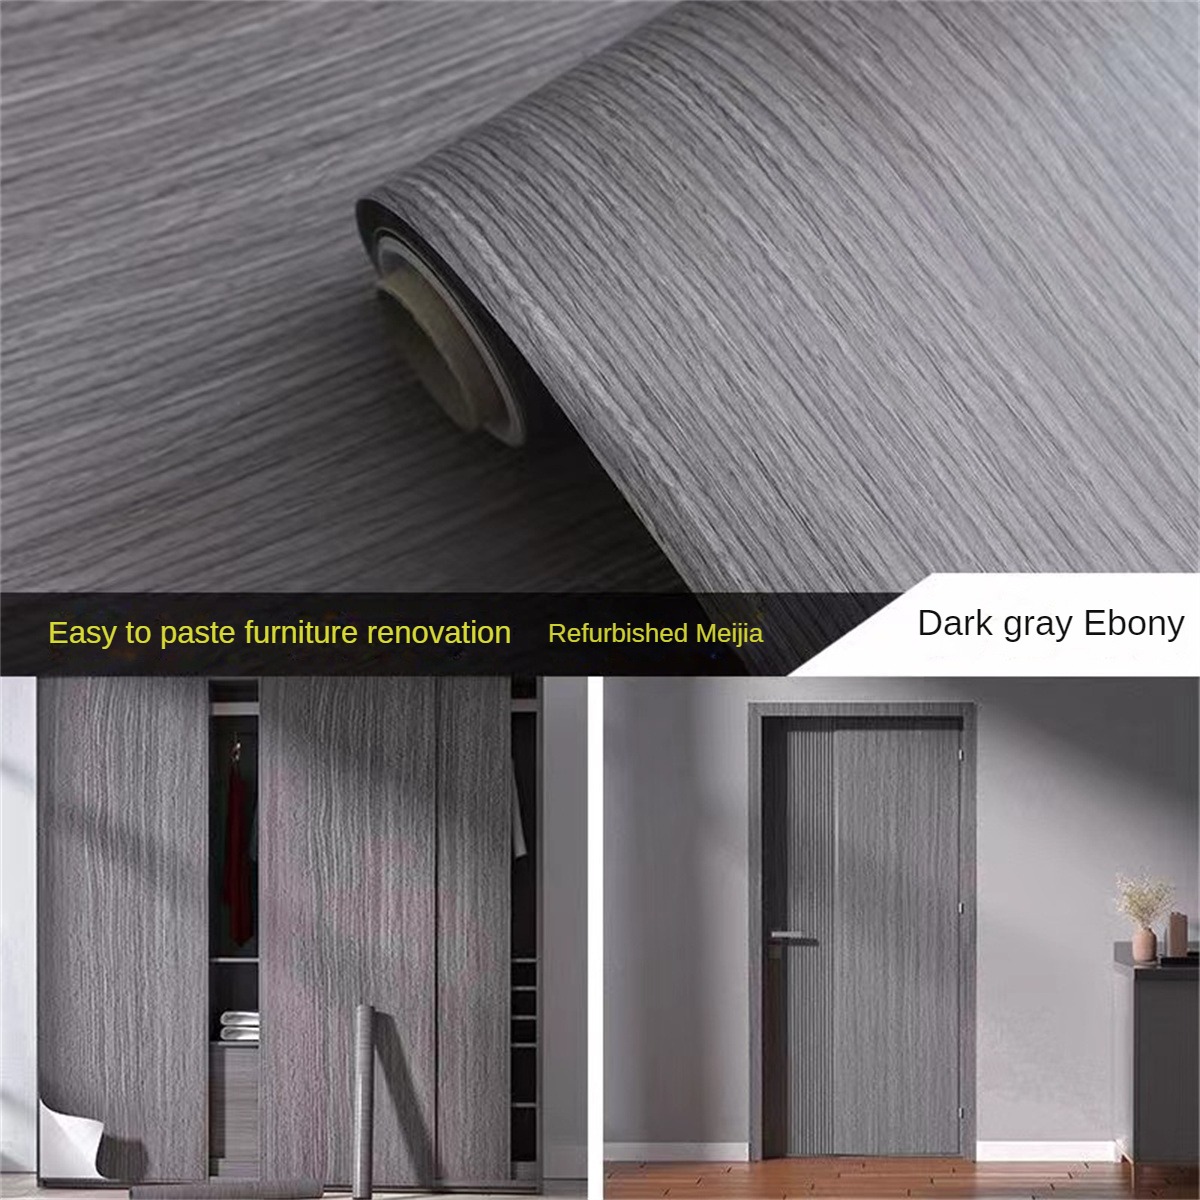 Papel tapiz de PVC autoadhesivo impermeable, rollo de papel tapiz blanco de  madera para puerta de